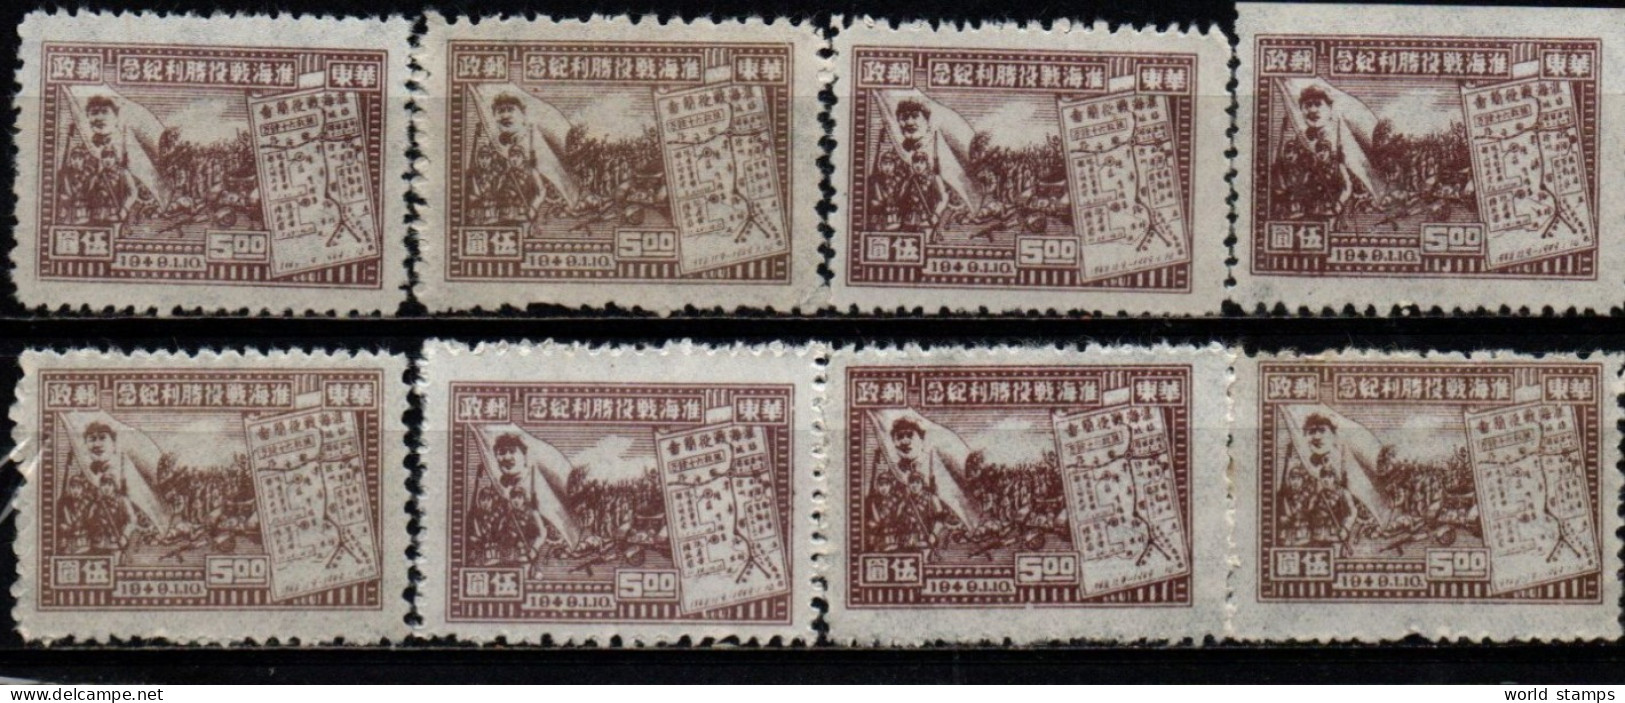 CHINE ORIENTALE 1949 SANS GOMME - China Oriental 1949-50